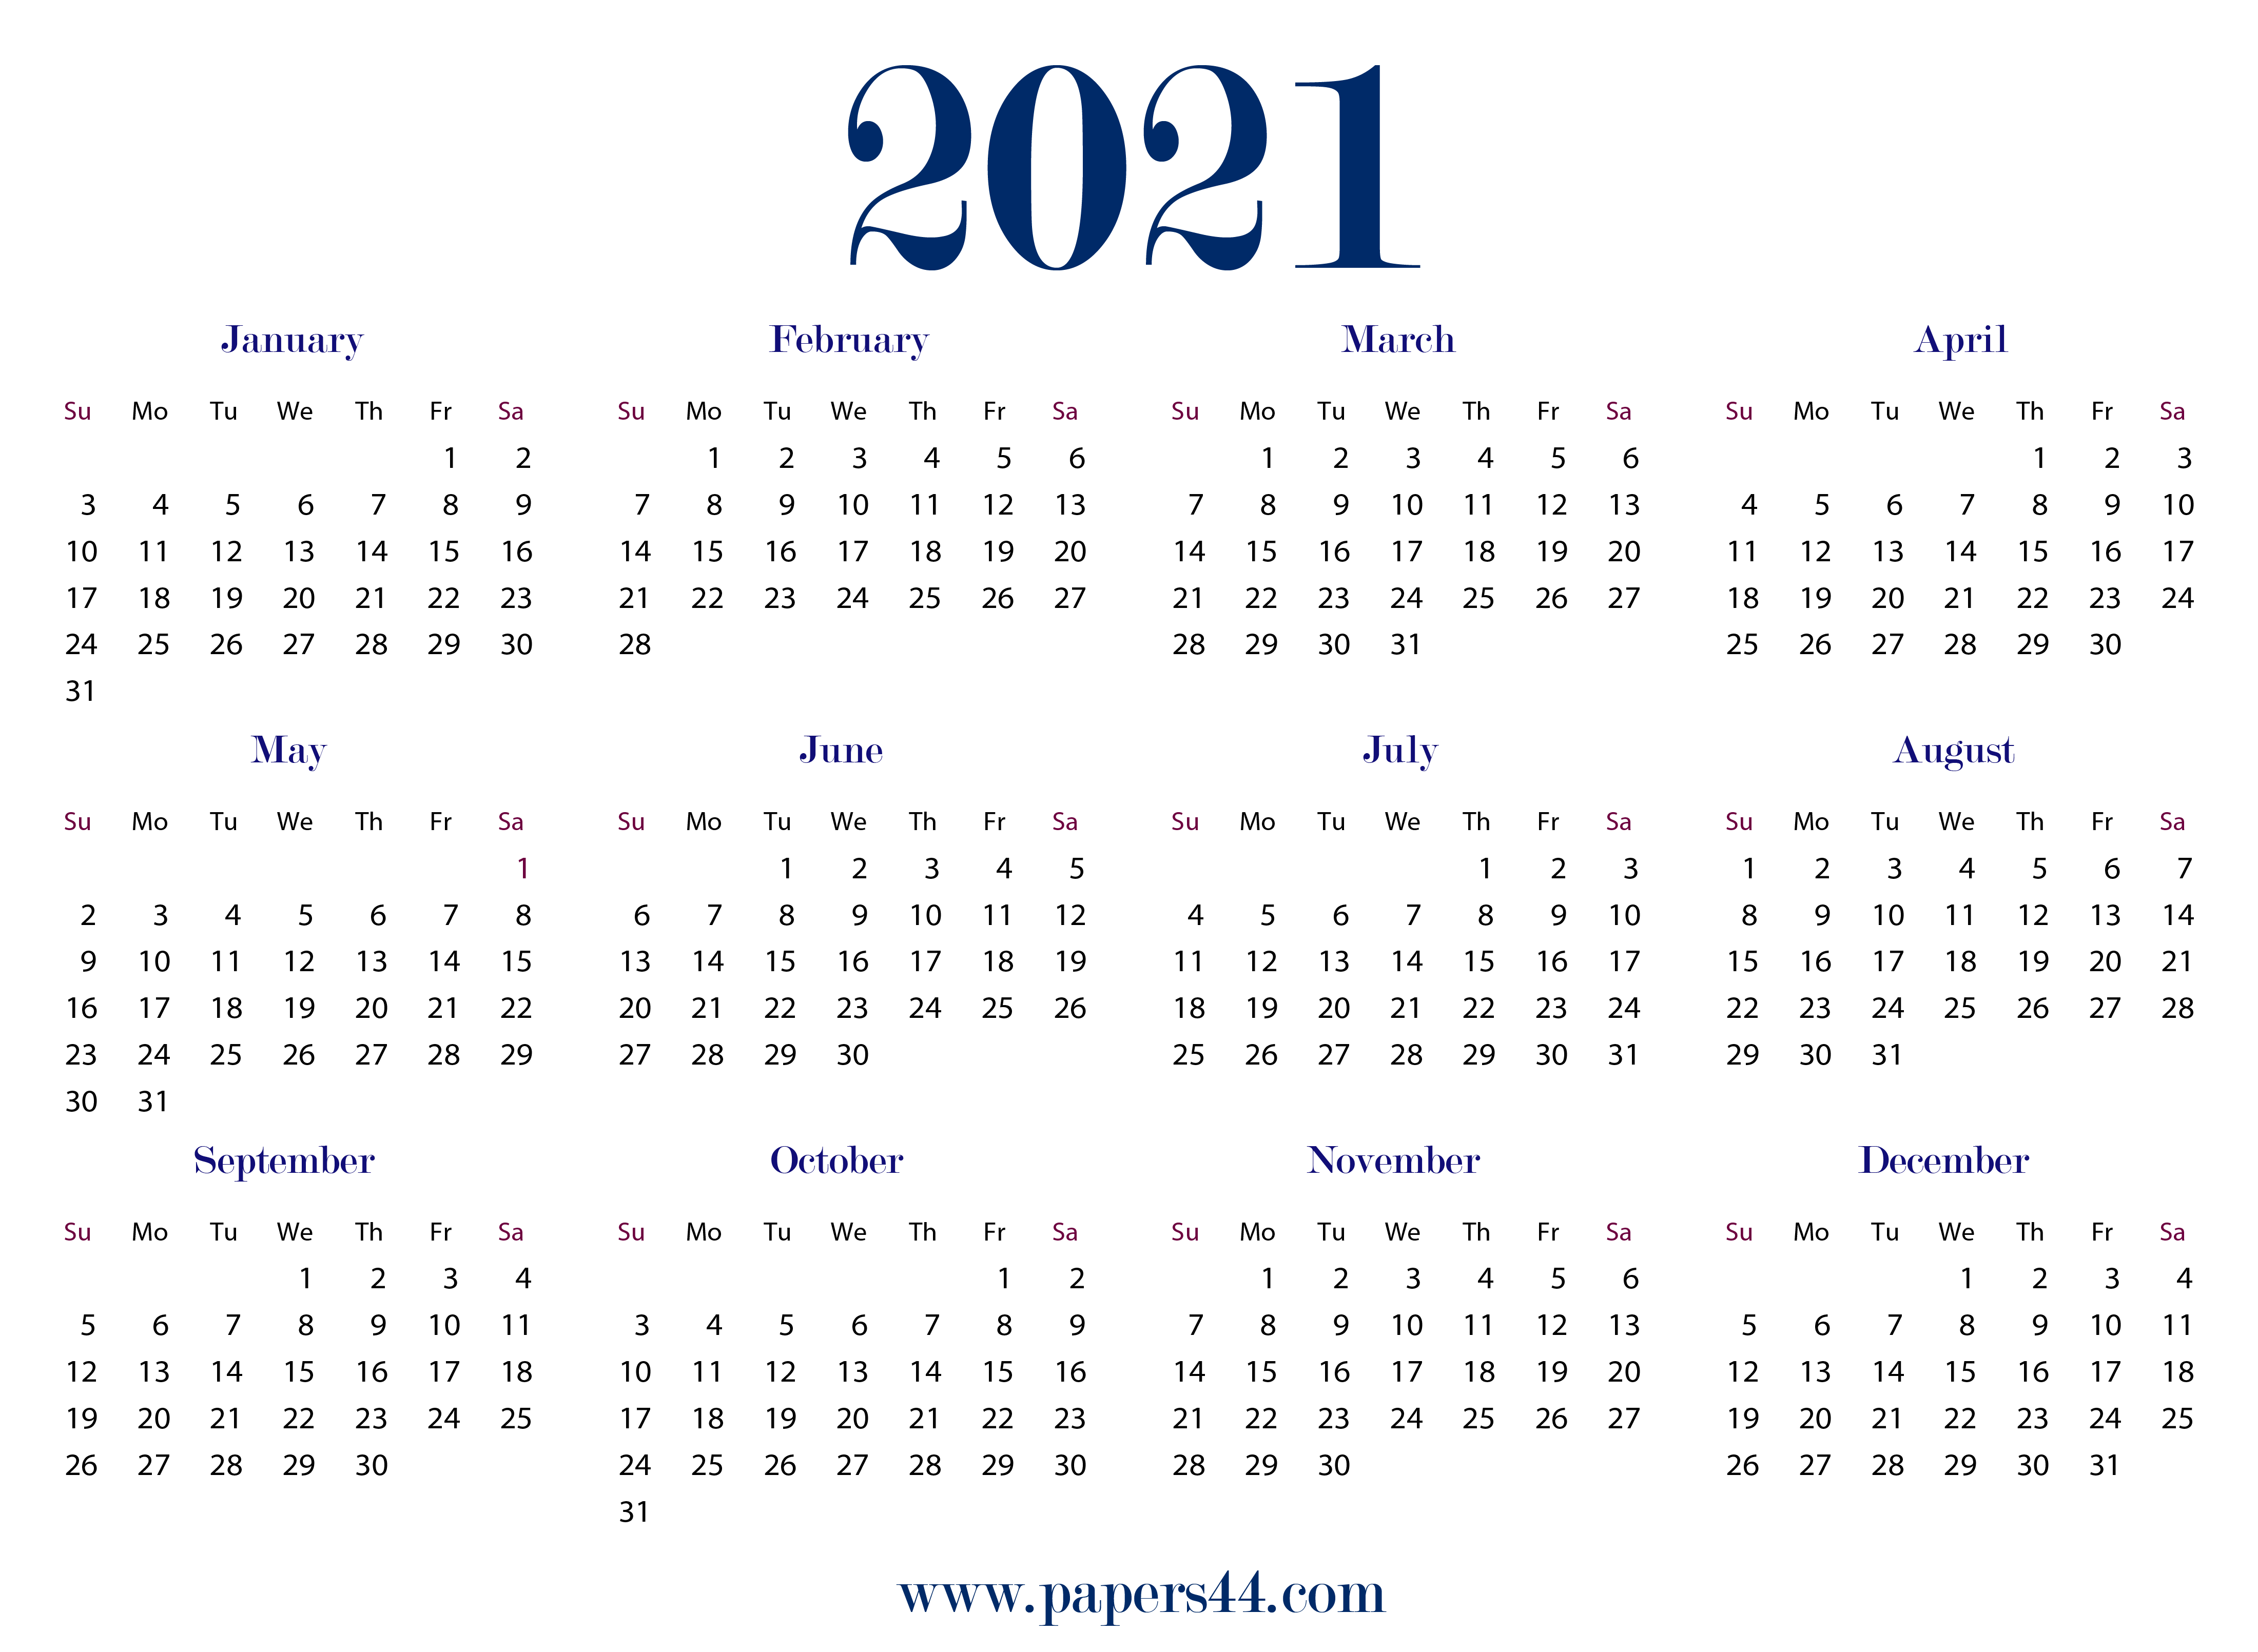 Календарь. Календарь 2021 прозрачный фон. Календарная сетка. Календарь на белом фоне. 1 неделя 2021